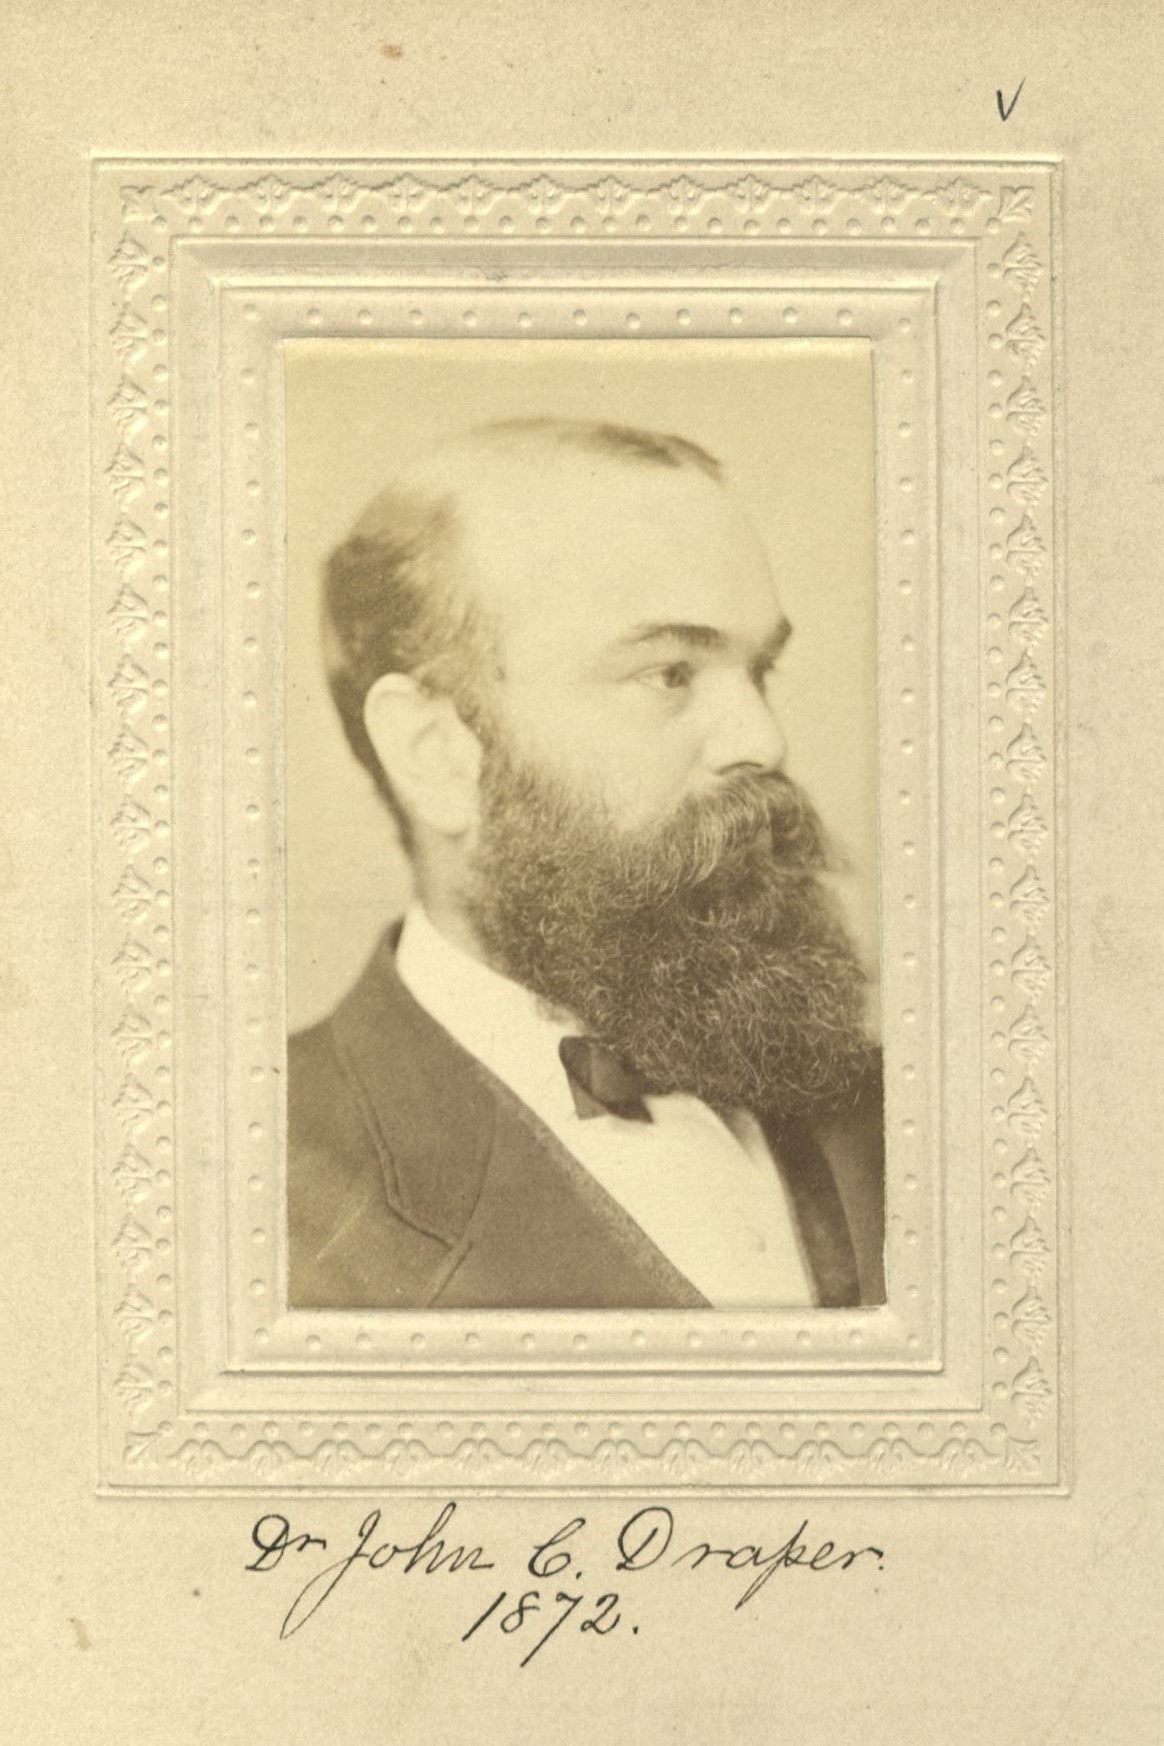 Member portrait of John C. Draper